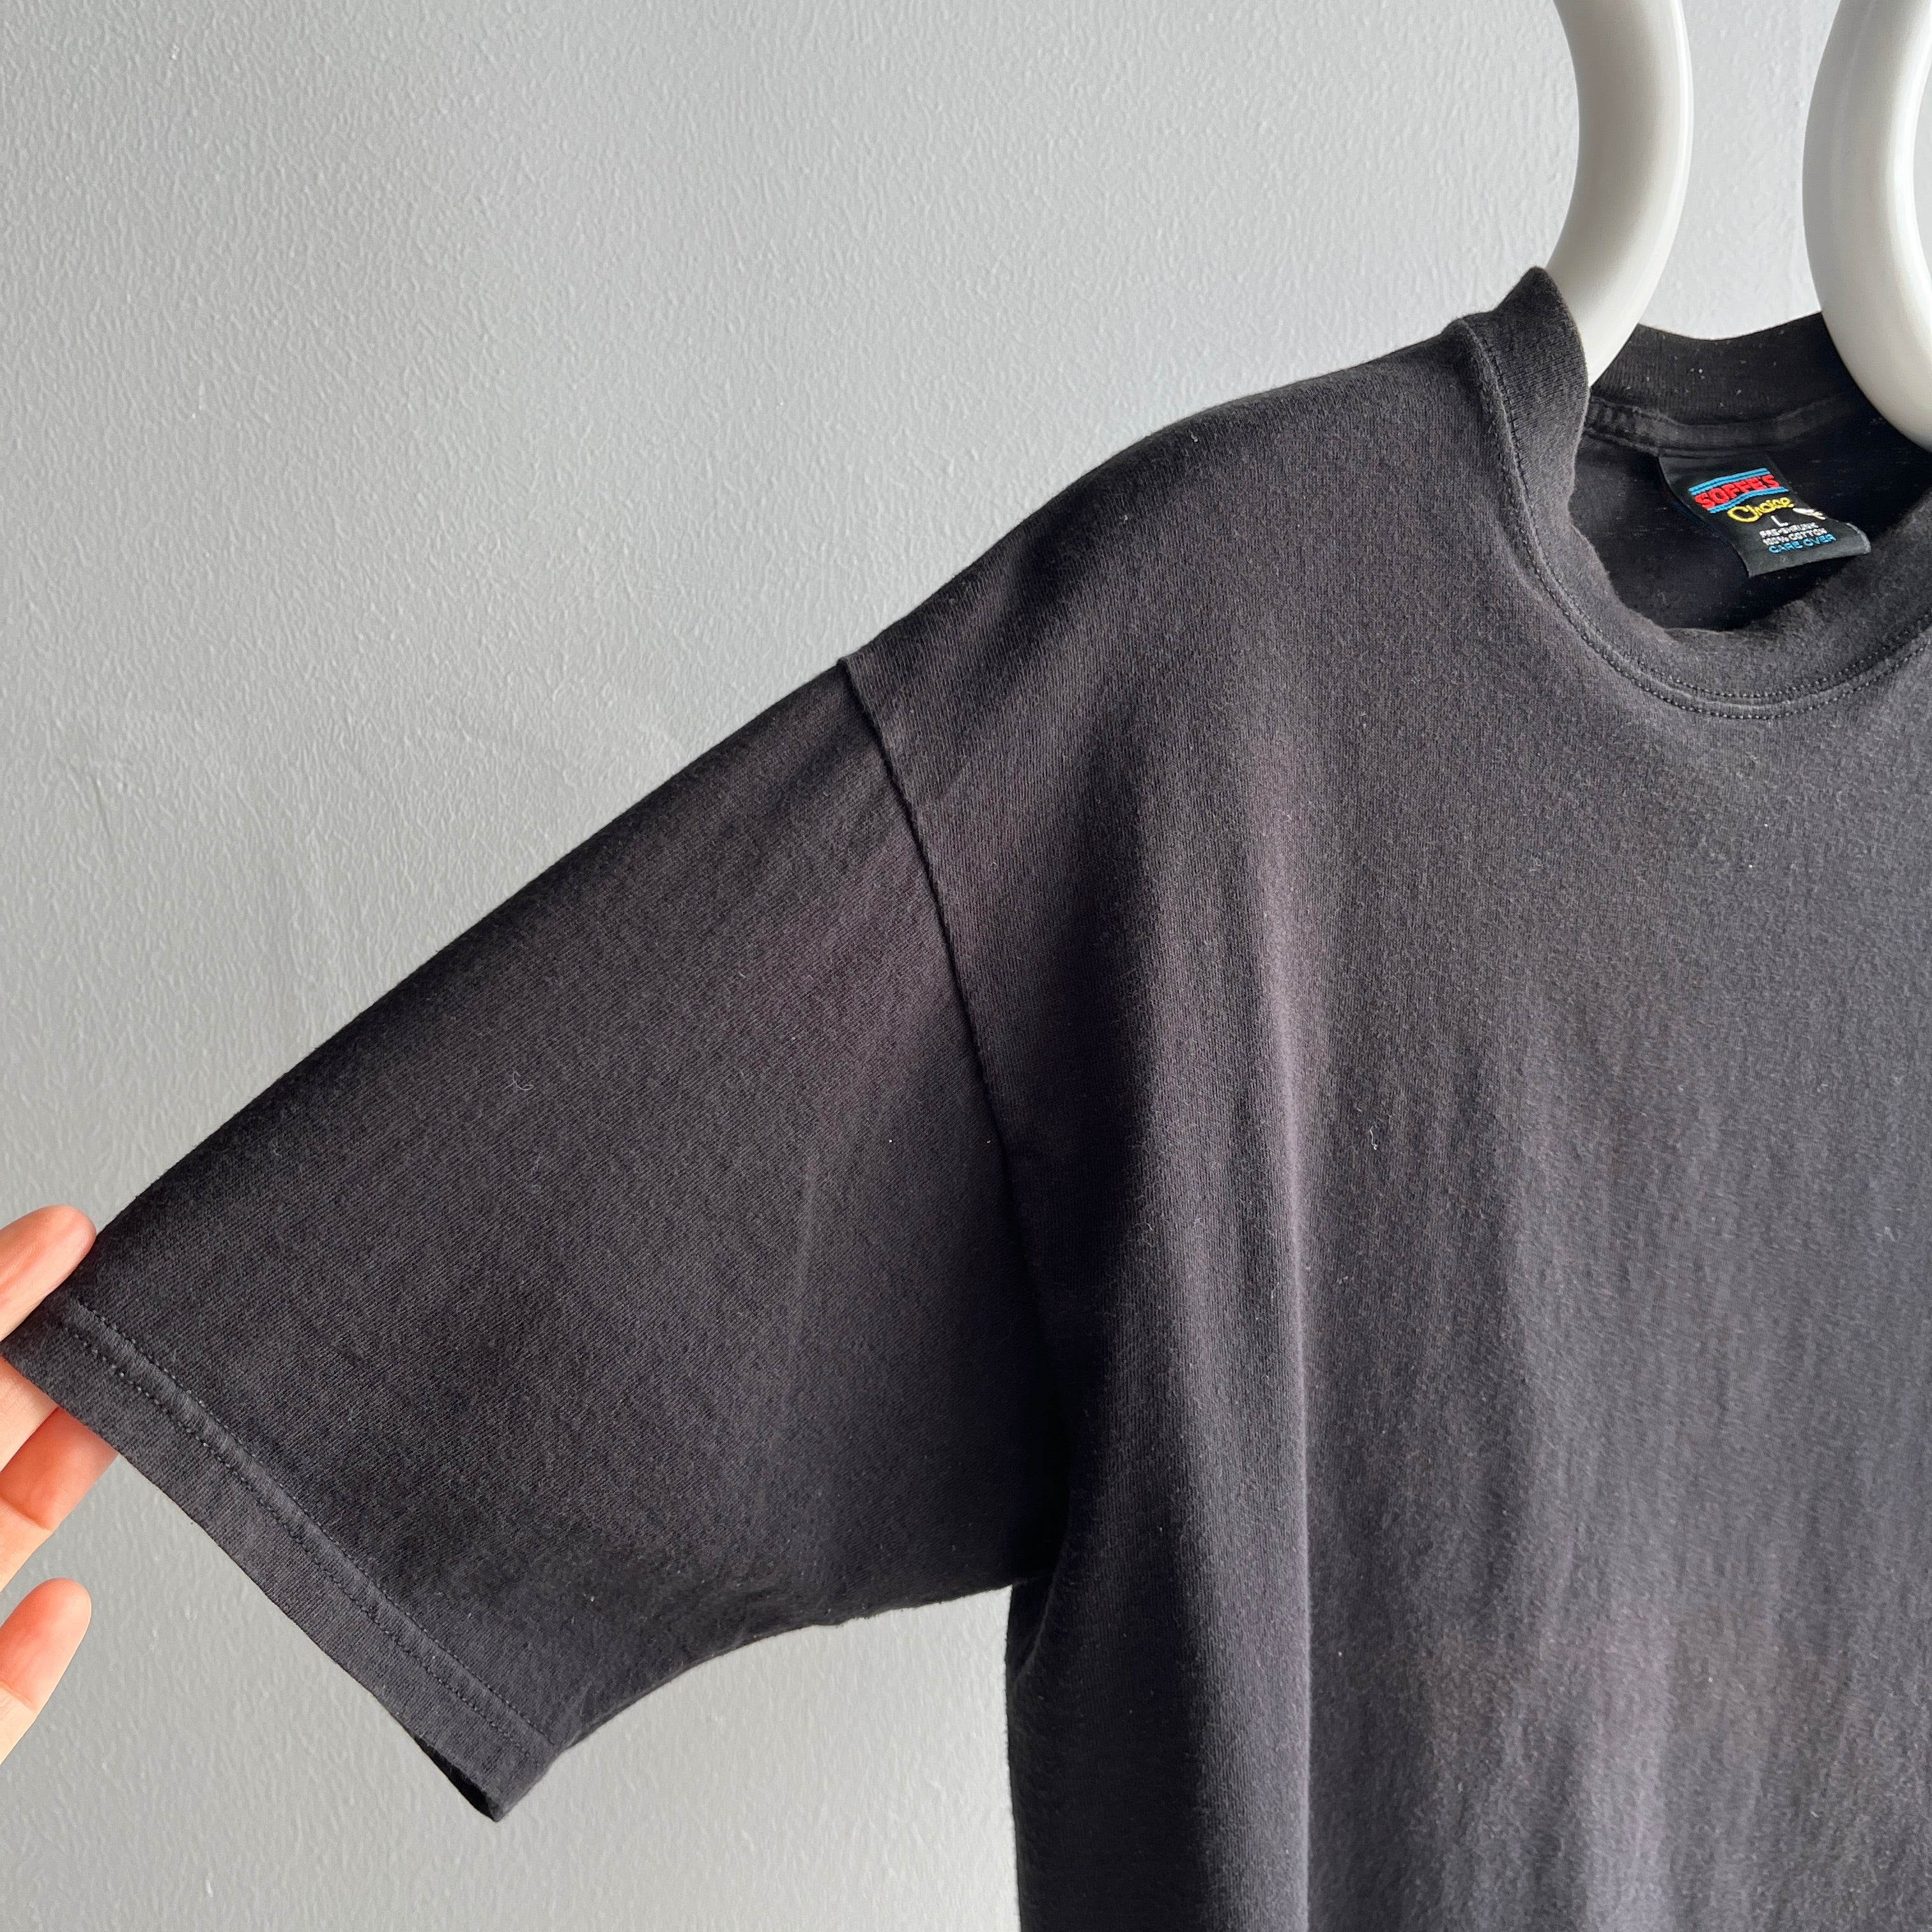 1990s Soffe's Choice Blank Black Cotton T-Shirt